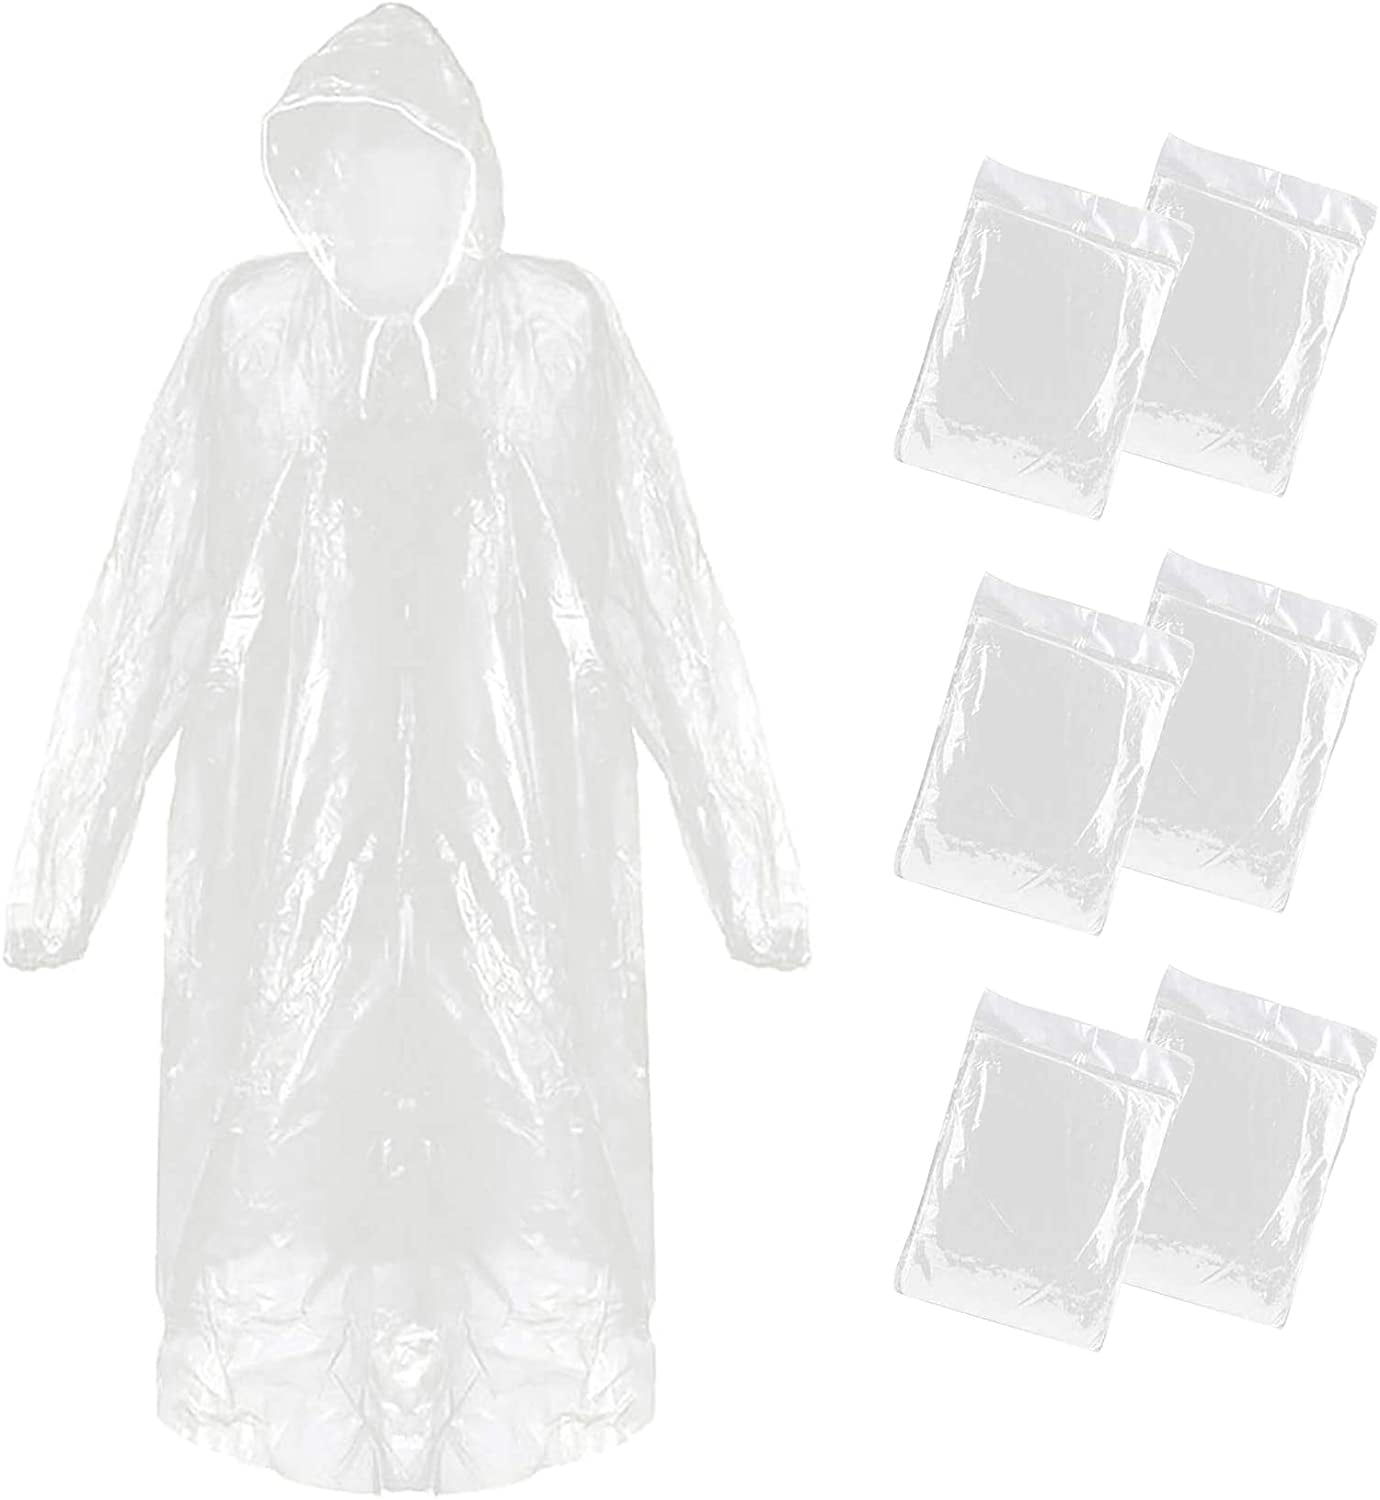 6 x Disposable Emergency Raincoat Adult Waterproof PONCHO Rain Festivals Hiking 